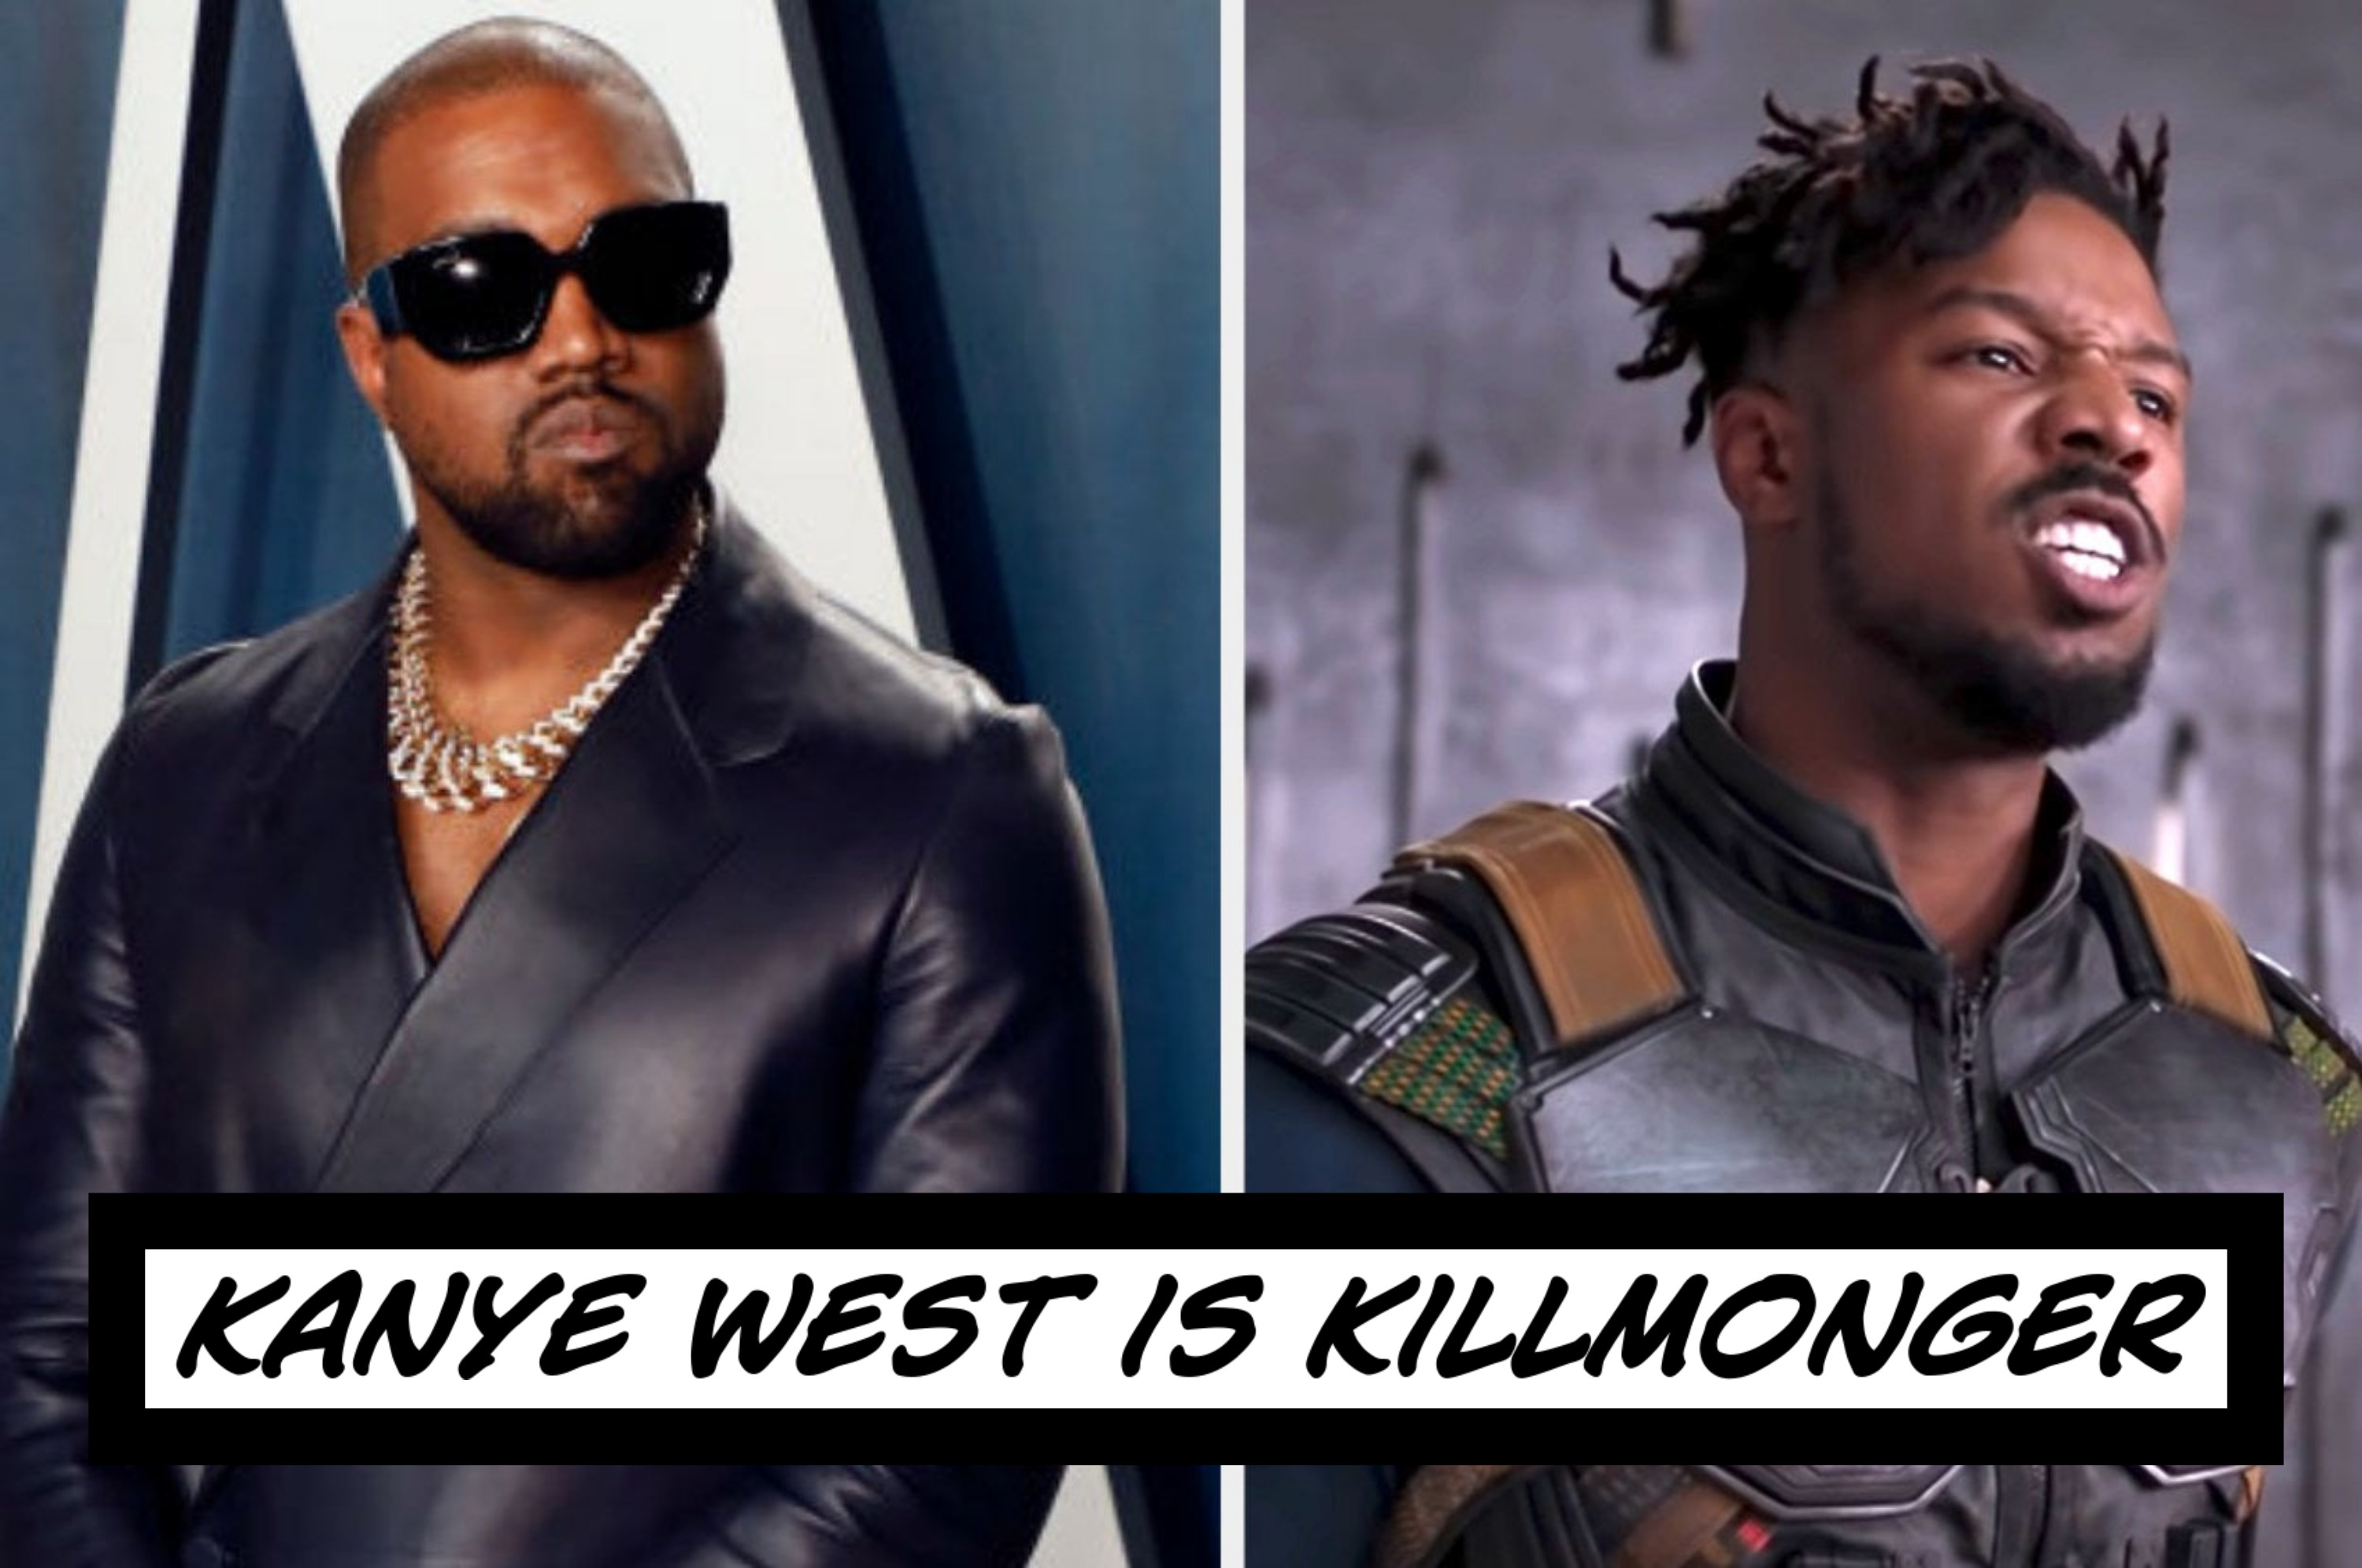 Kanye West as Killmonger